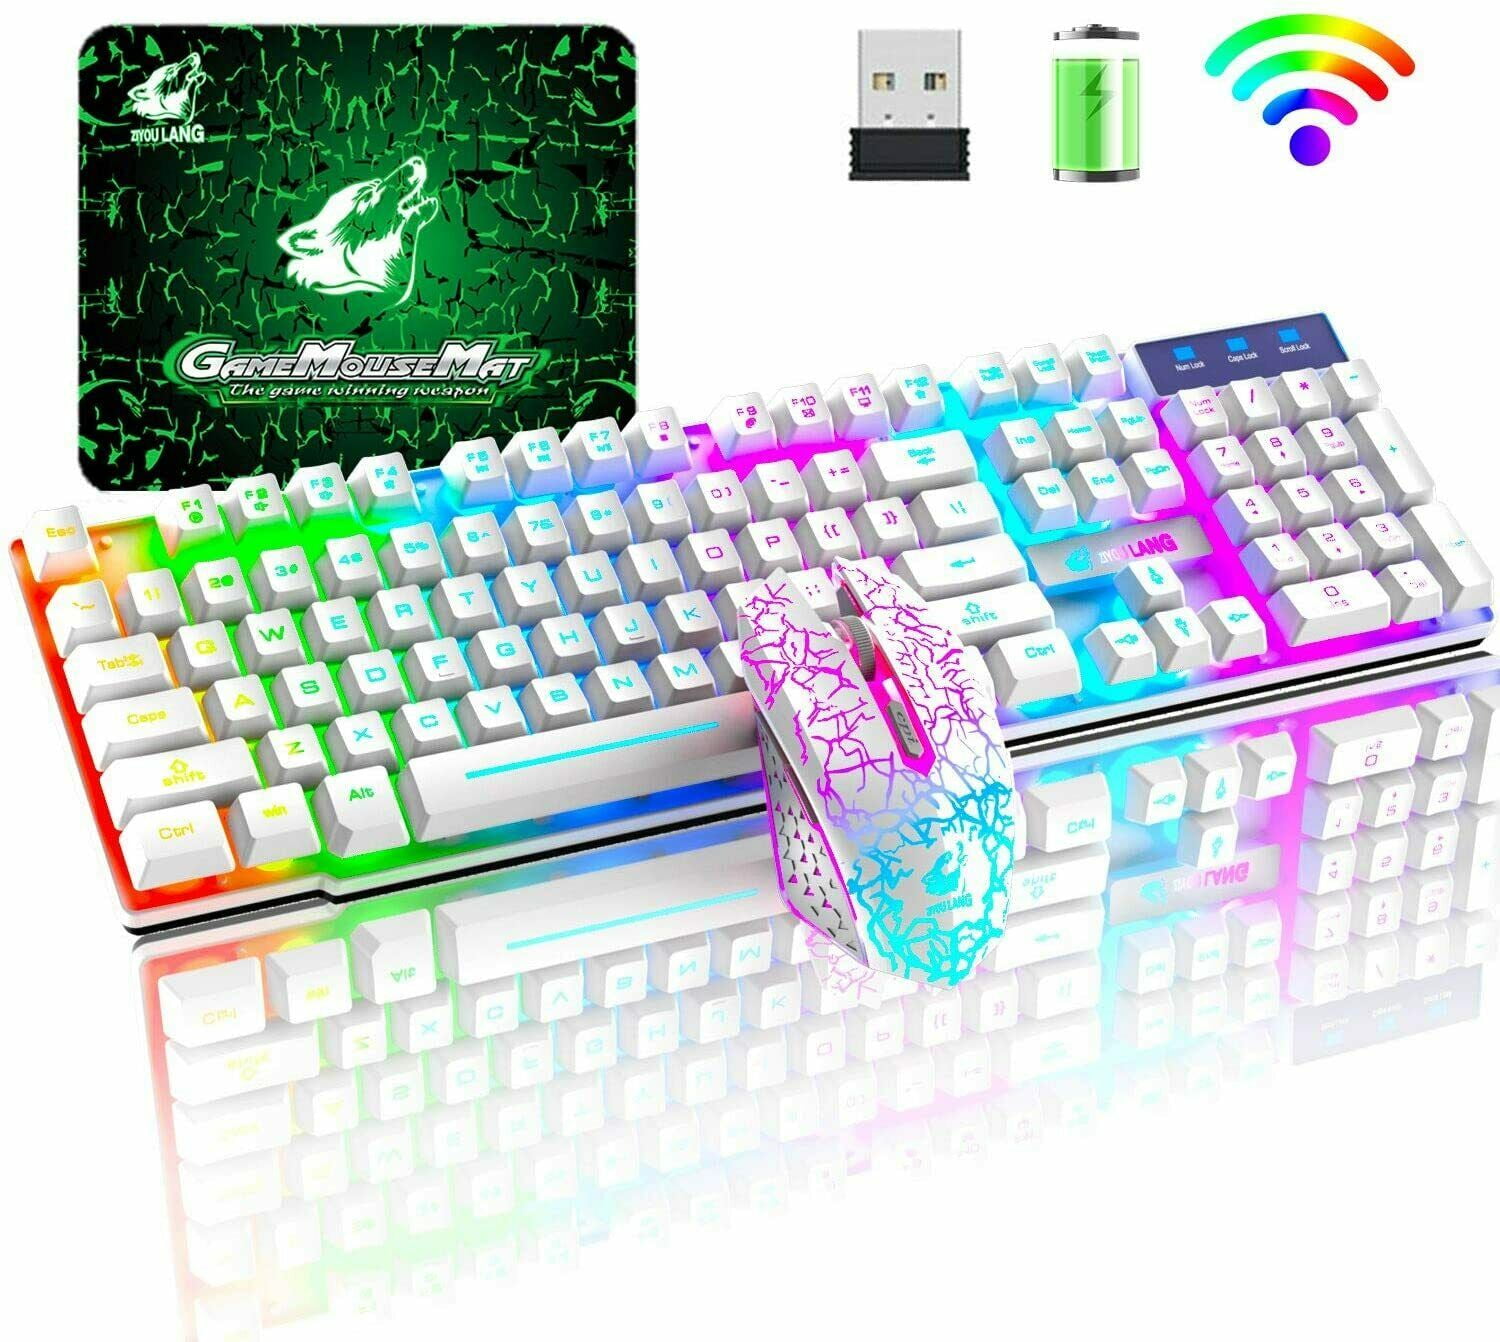 USB Wireless Waterproof Rechargeable Luminous Ergonomic Gaming Keyboard Mouse 